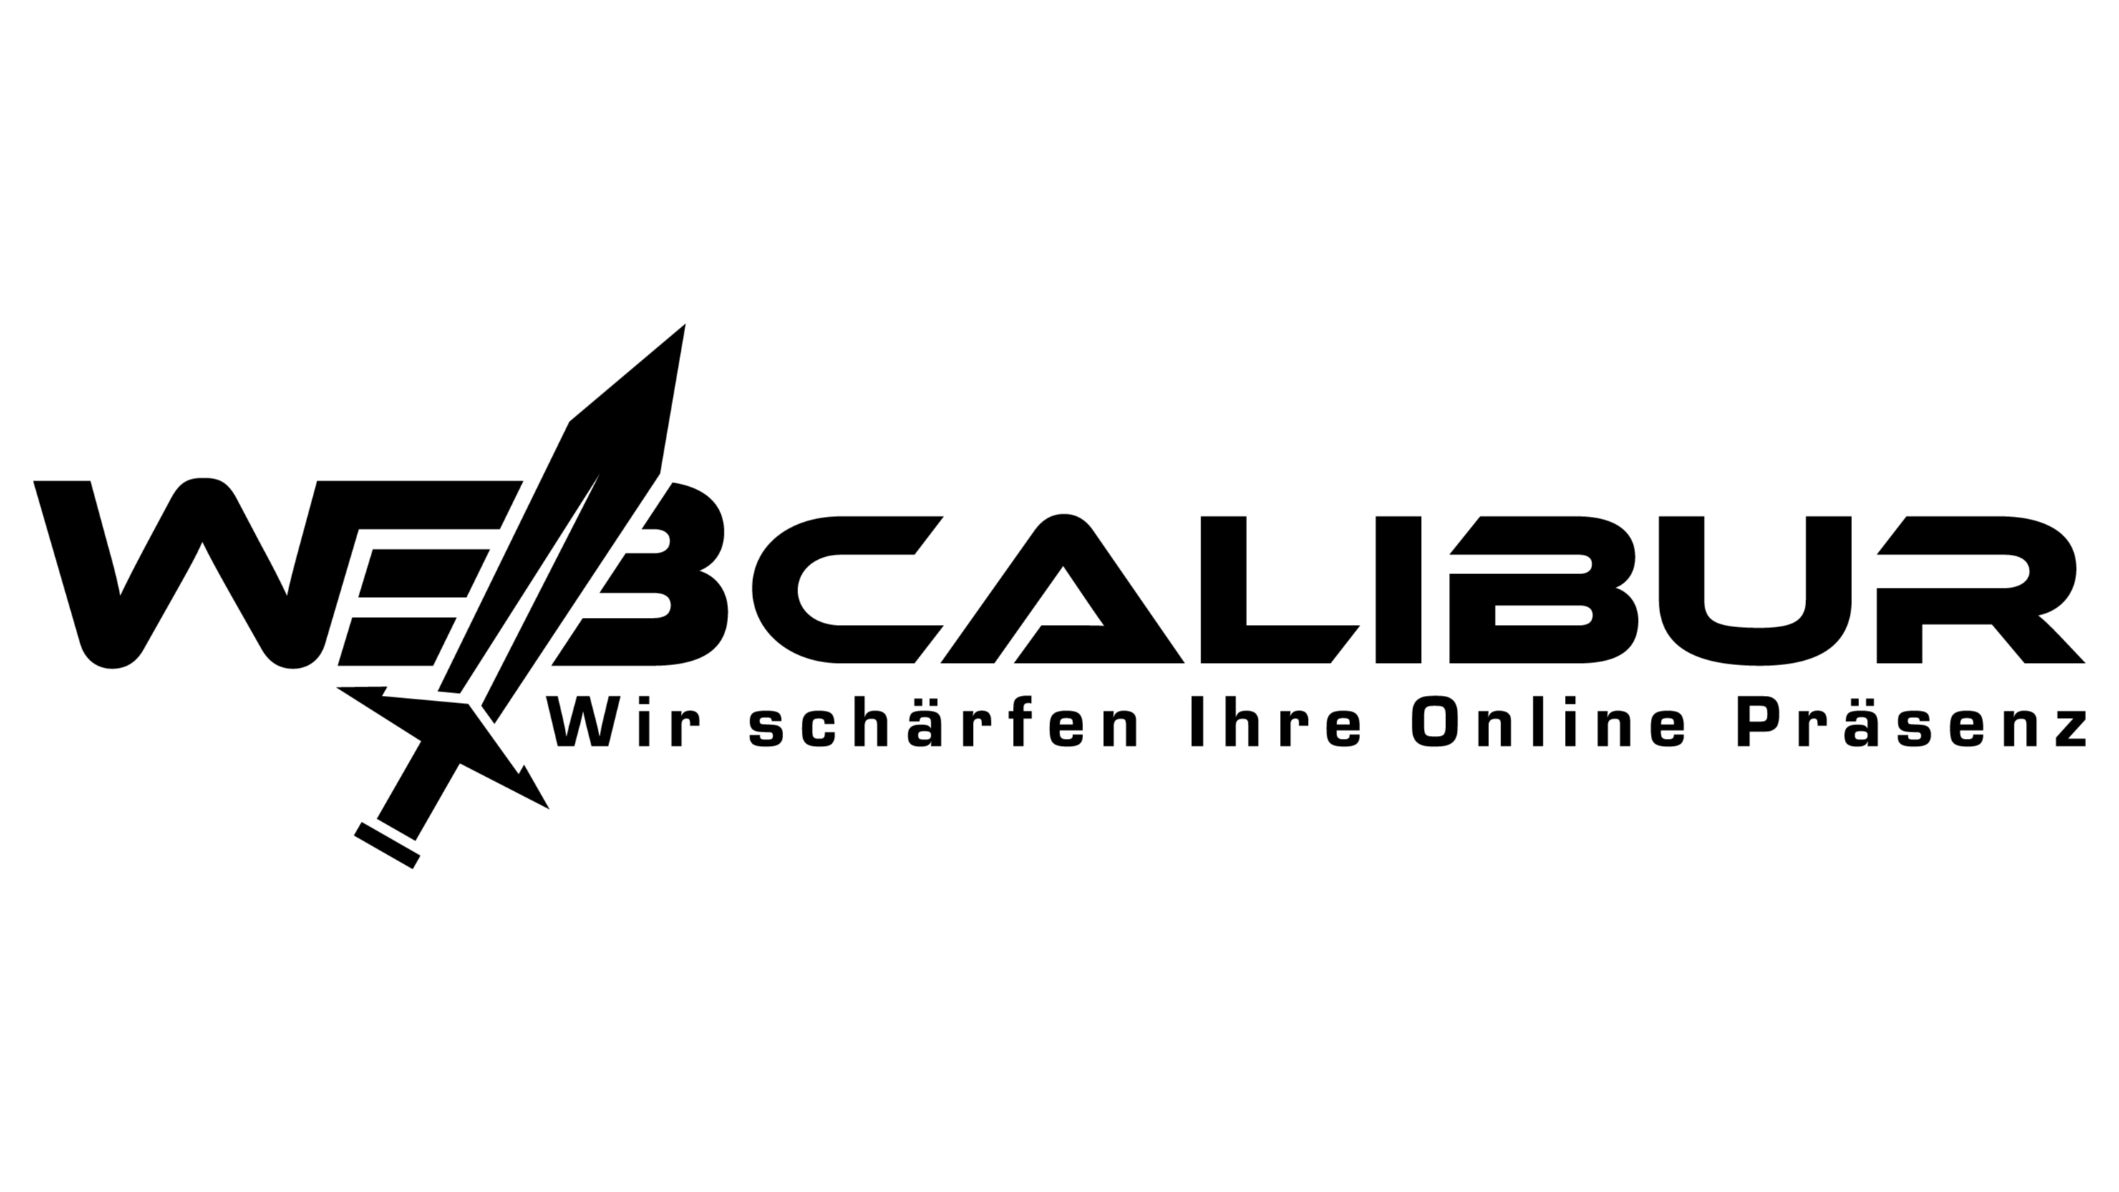 Webcalibur - Website Designer - Wollerau - 079 769 19 92 Switzerland | ShowMeLocal.com